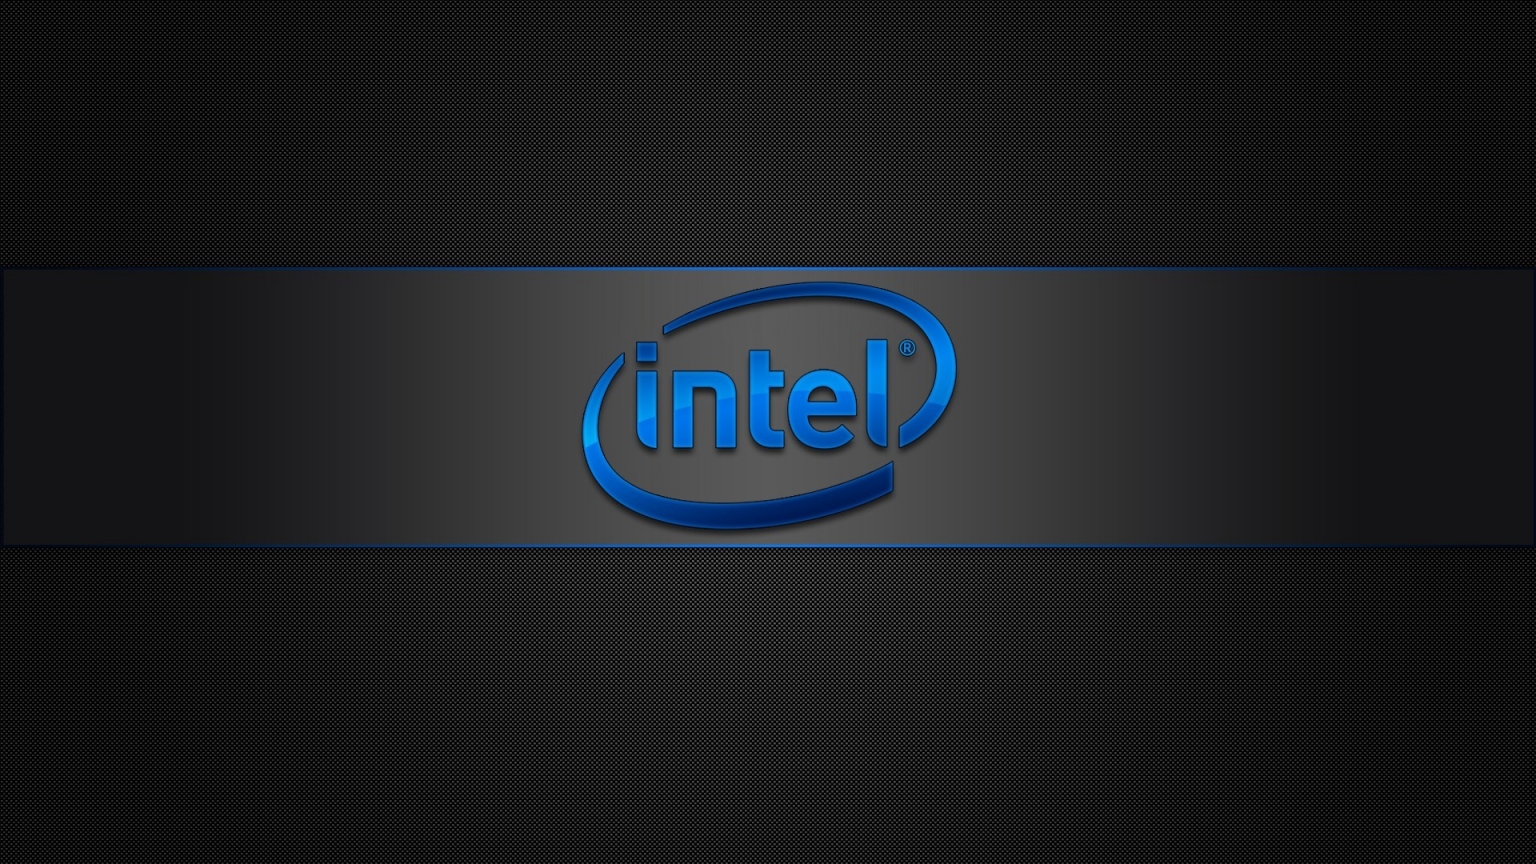 Intel for 1536 x 864 HDTV resolution